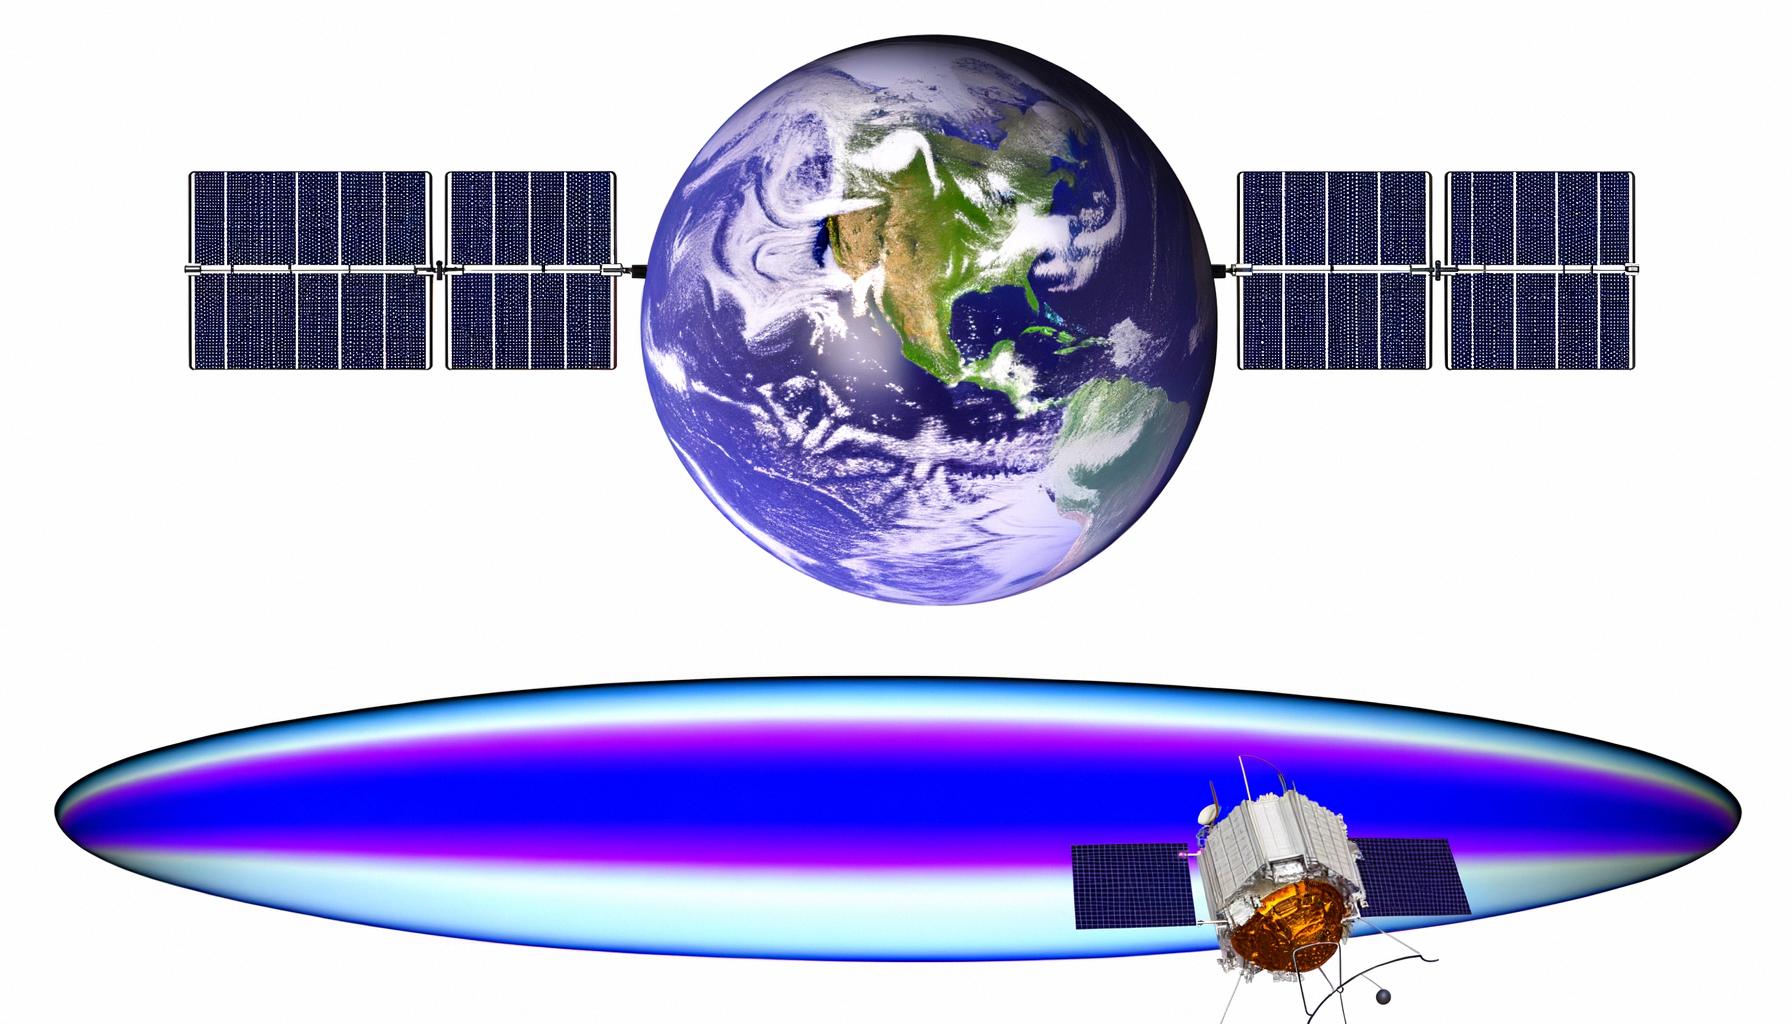 Starlink satellites' reentry may worsen ozone depletion, increasing environmental risk.